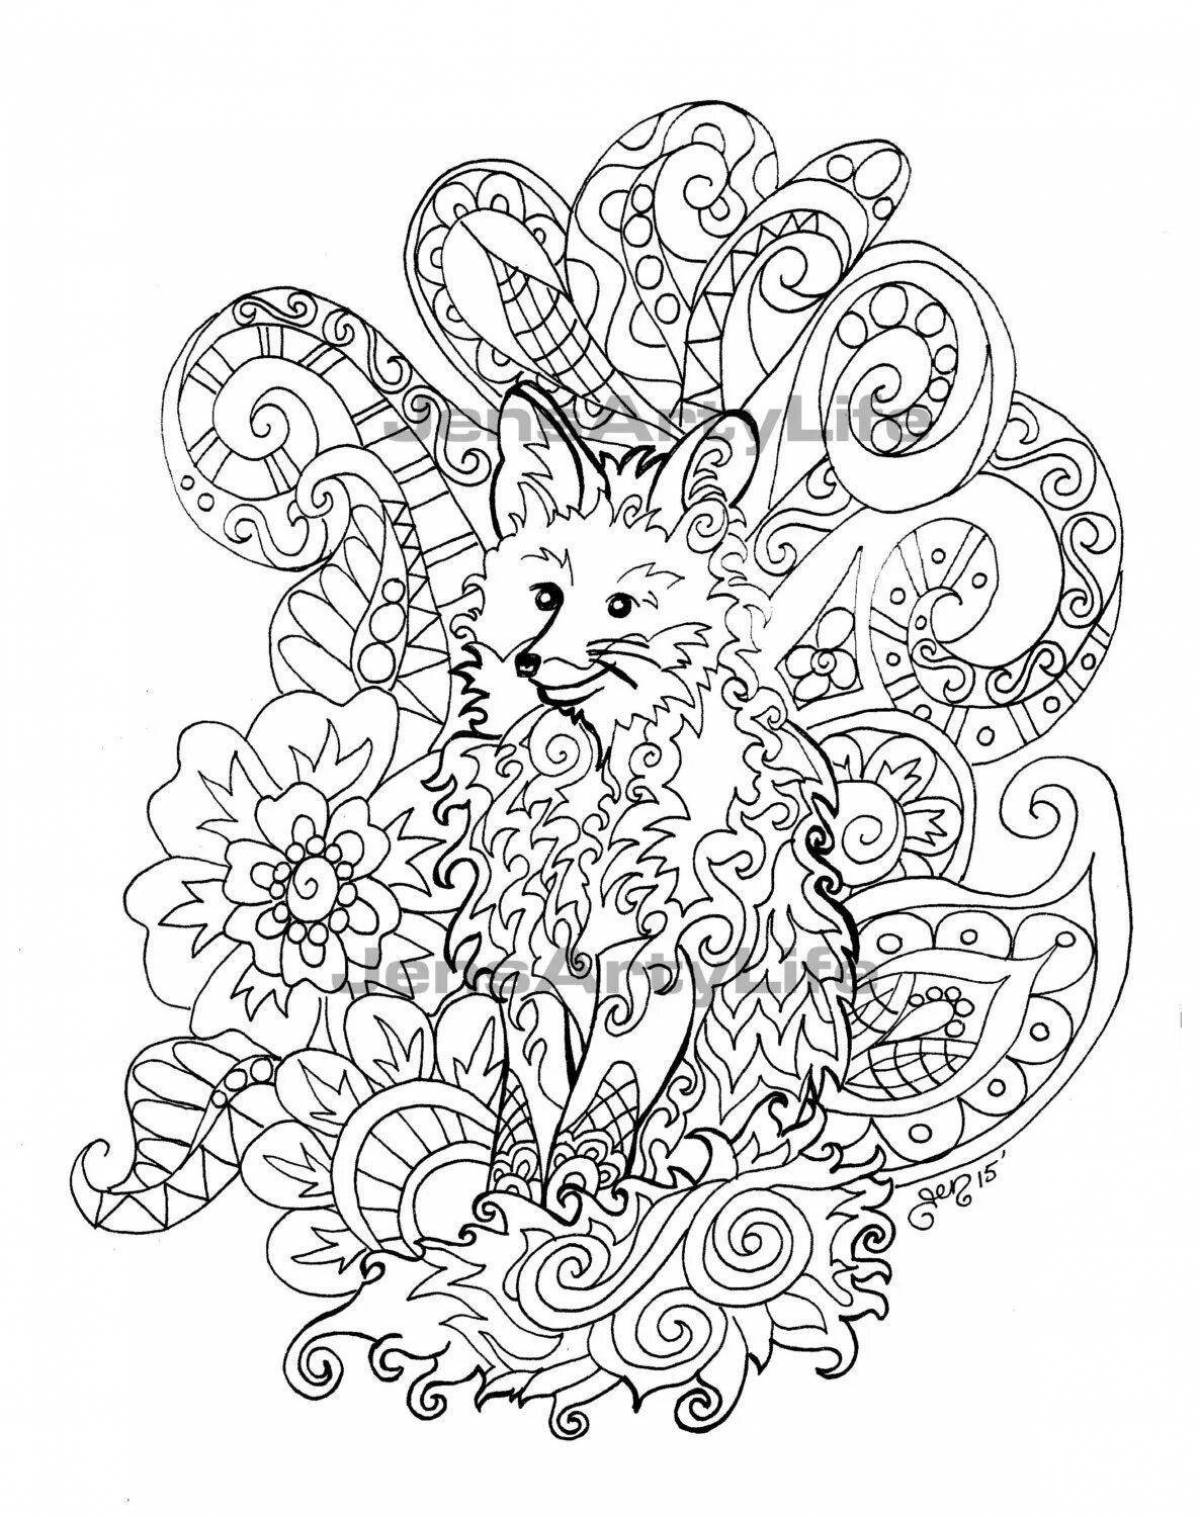 Joyful fox anti-stress coloring book